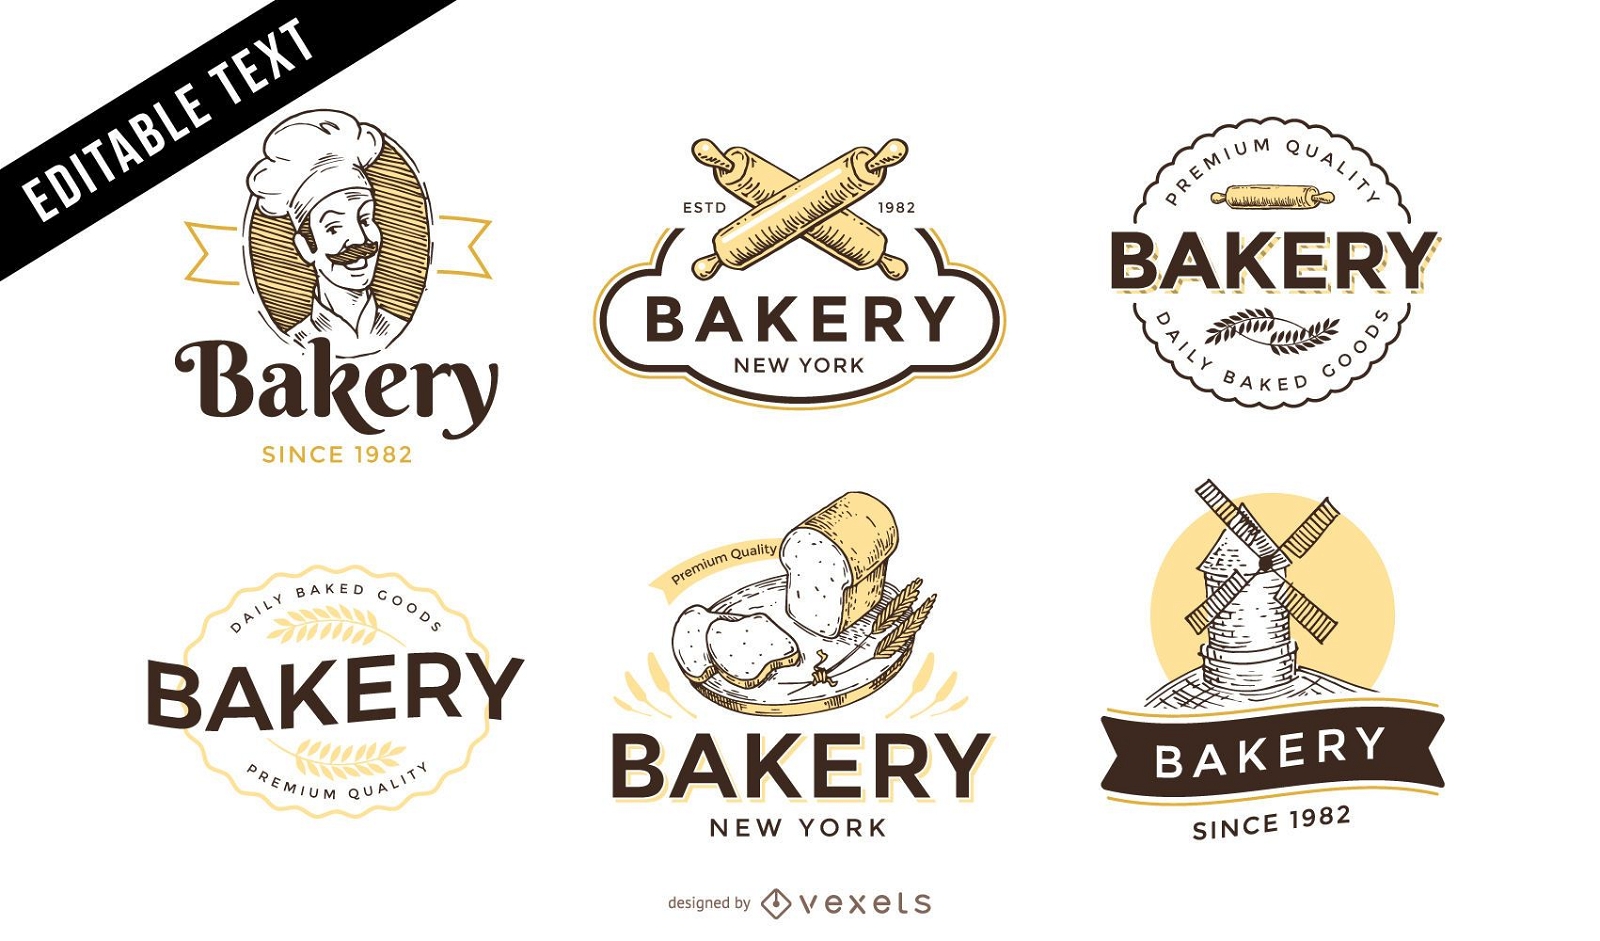 bakery logo png